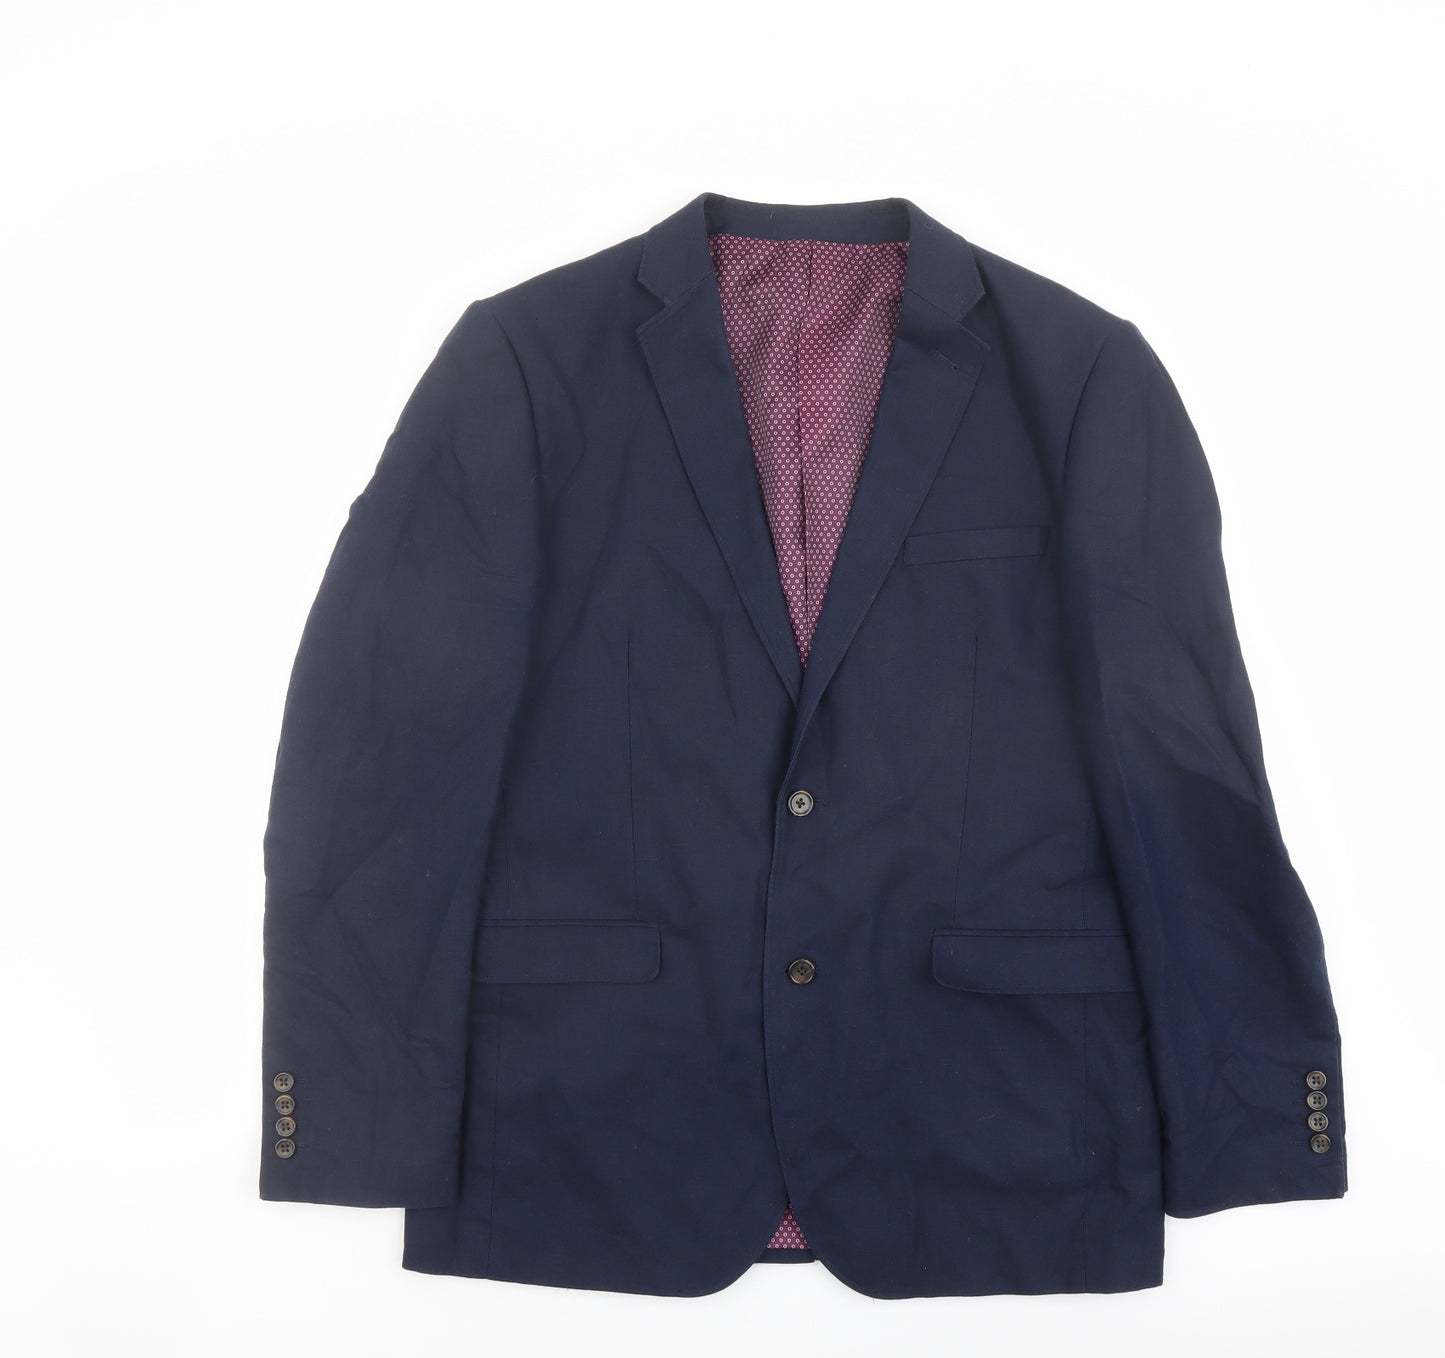 NEXT Mens Blue Linen Jacket Suit Jacket Size 44 Regular